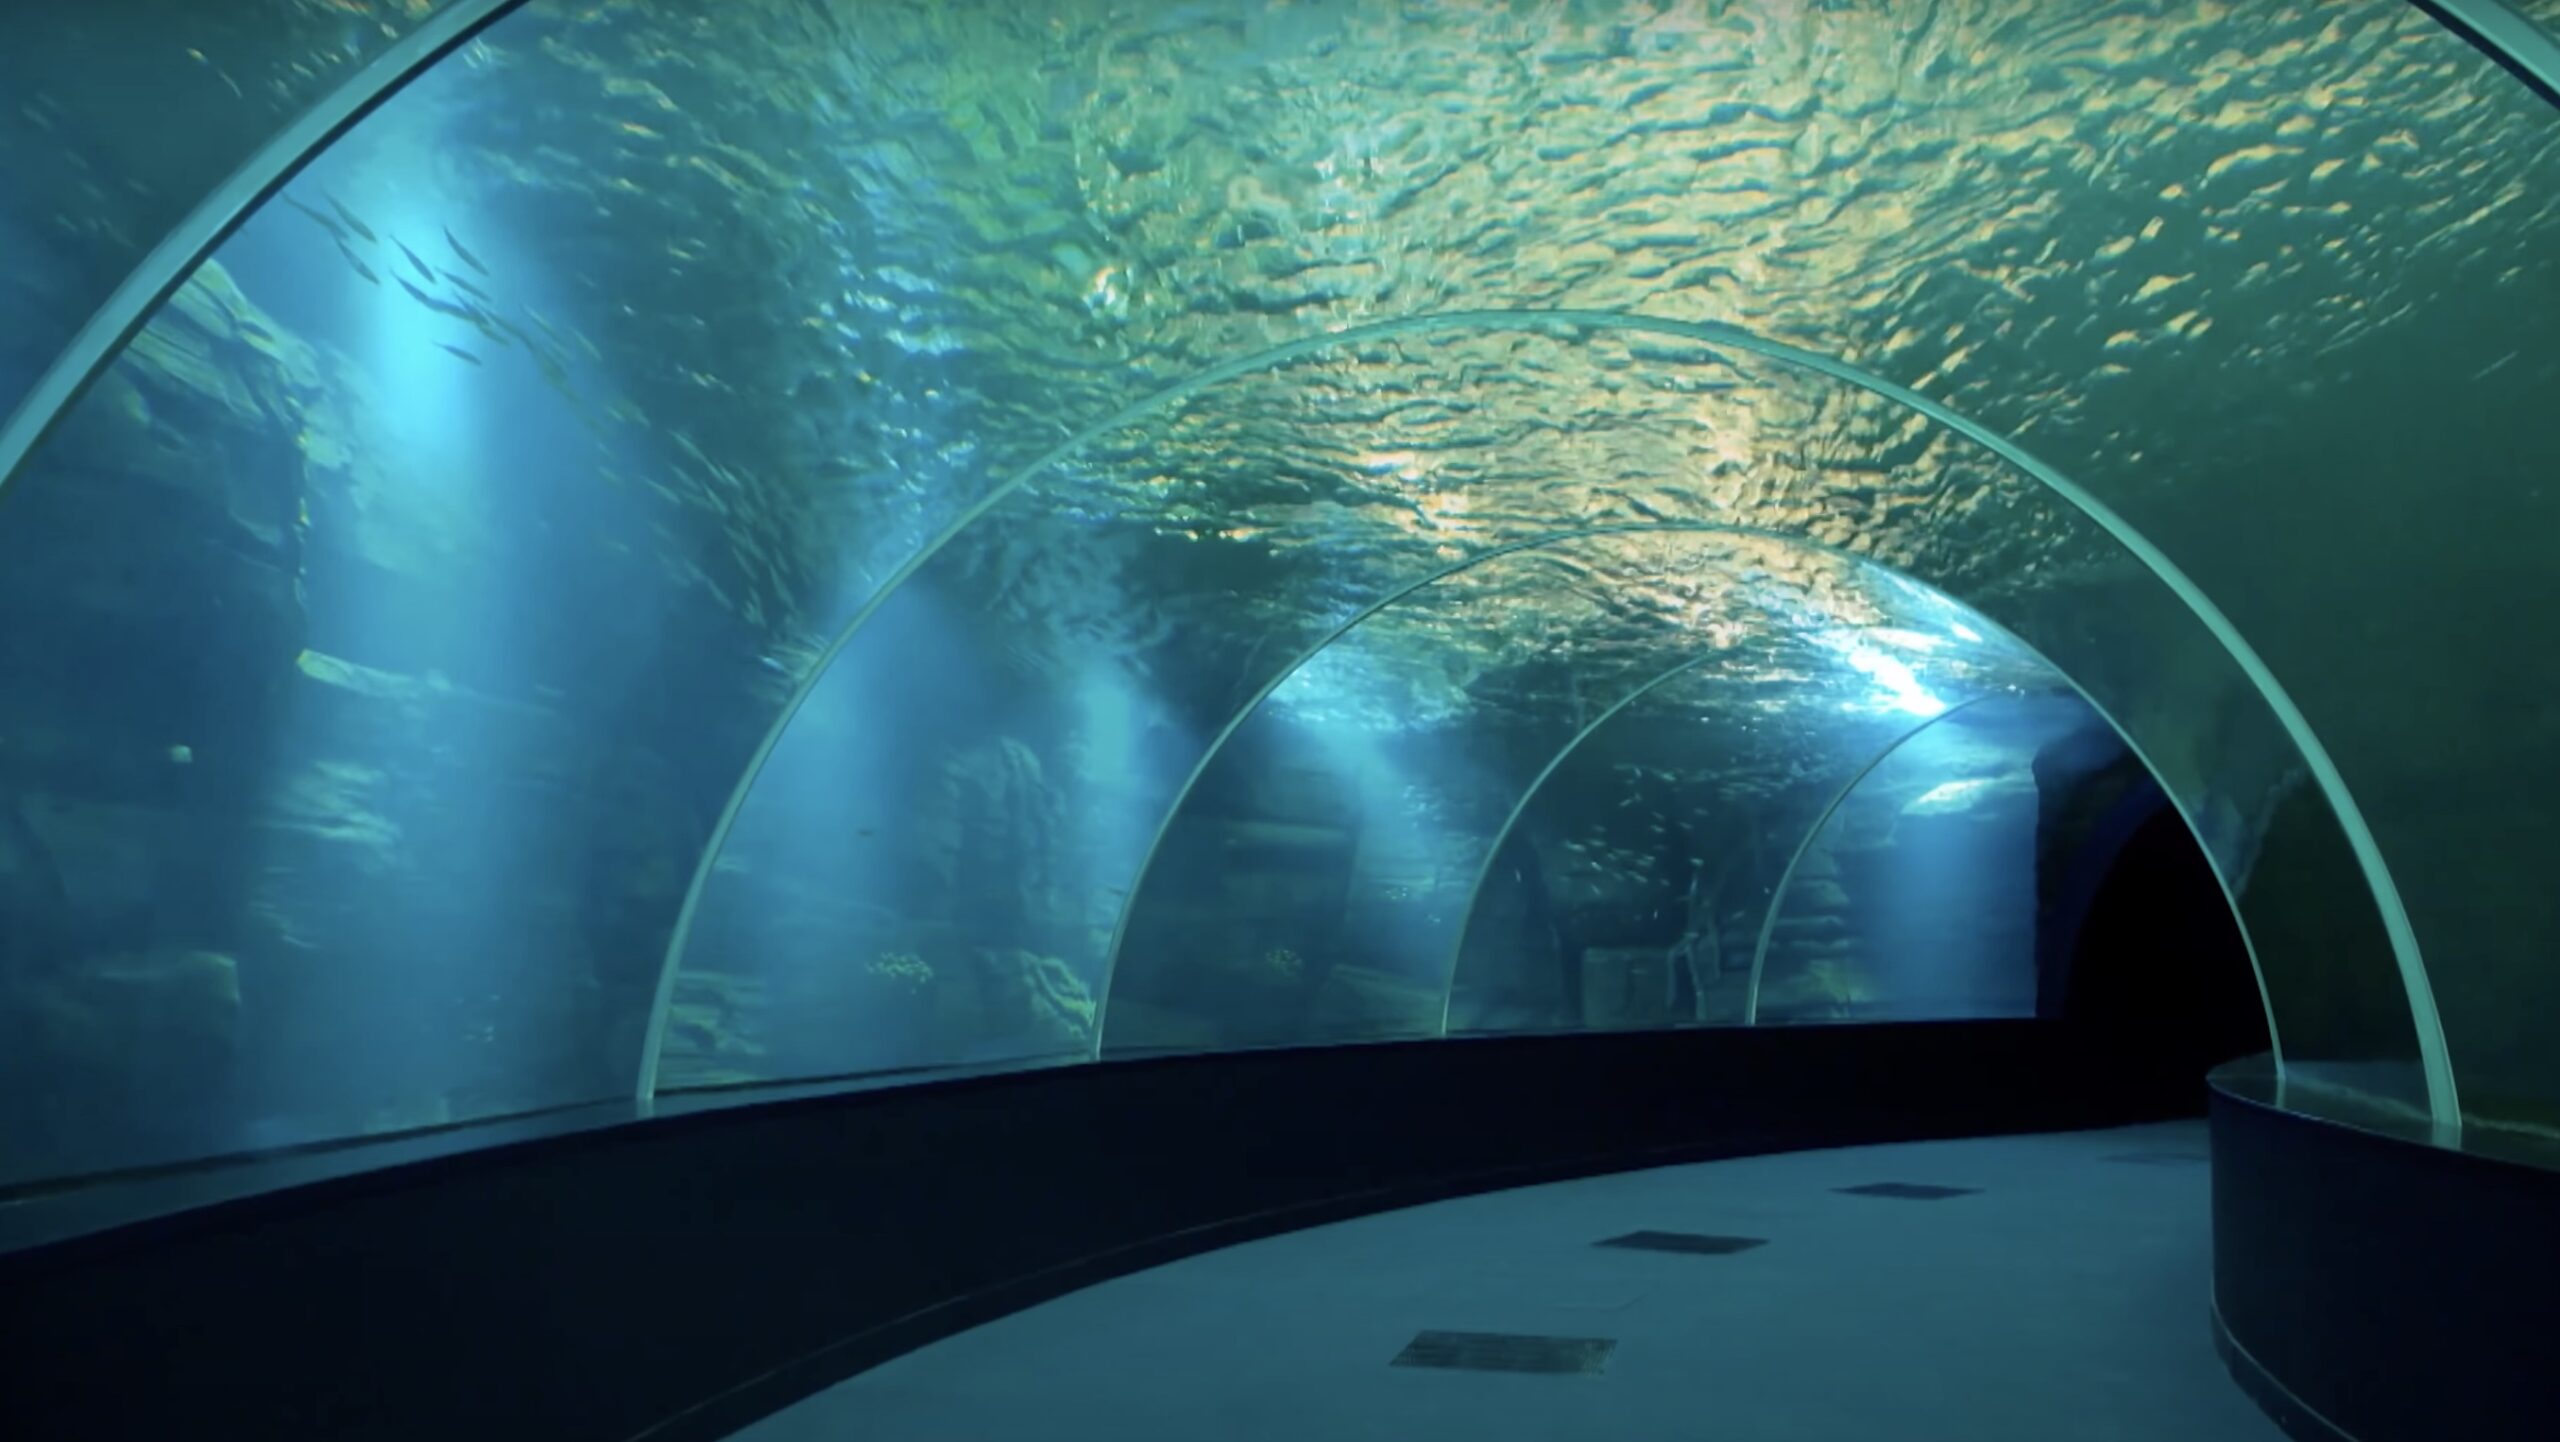 tunel led light acquario pubblico